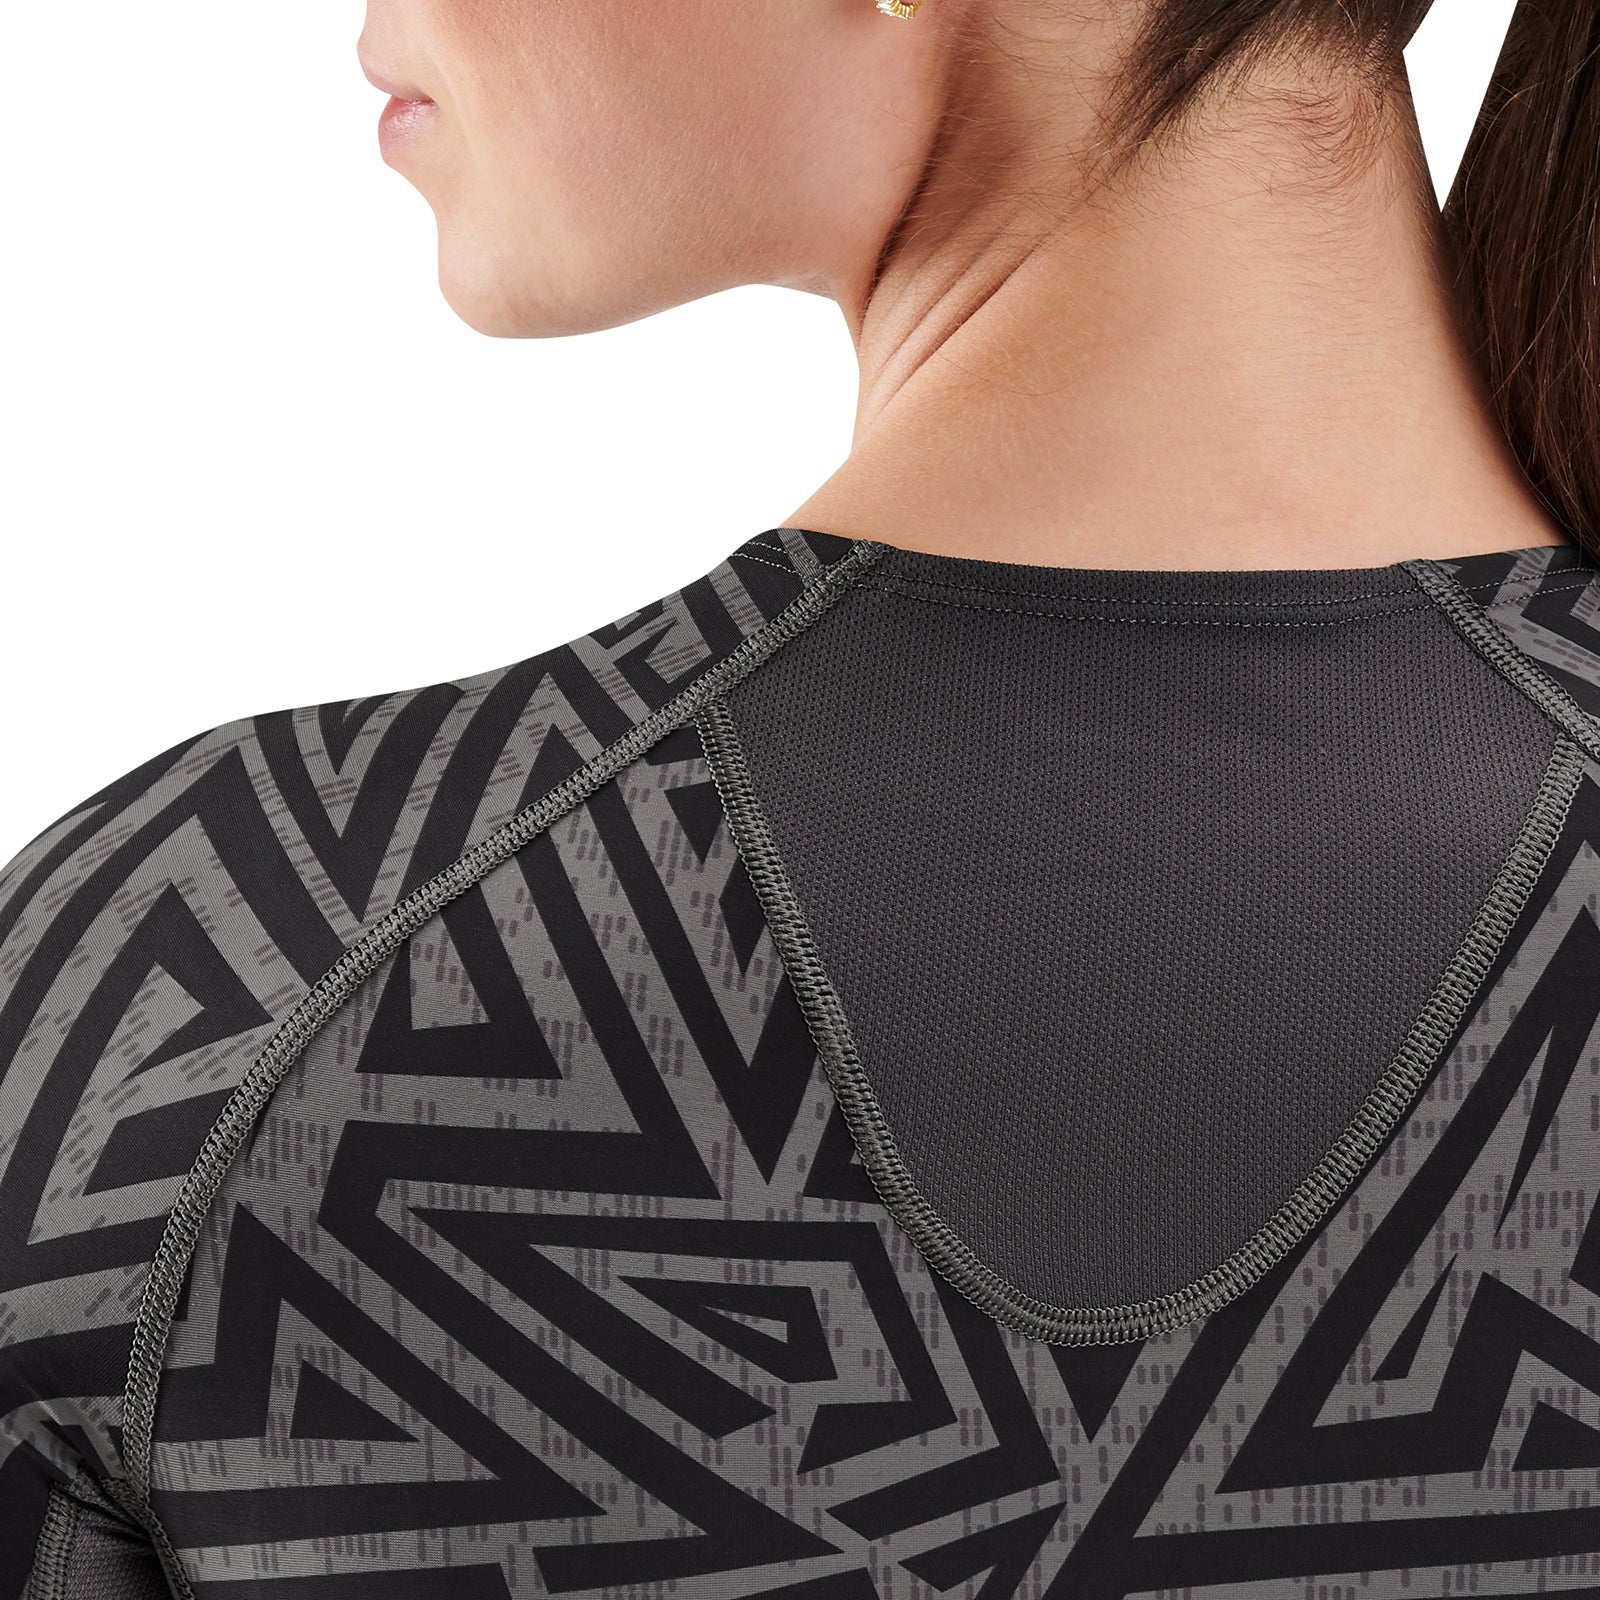 SKINS SERIES-3 Women's Long Sleeve Top Charcoal Angle